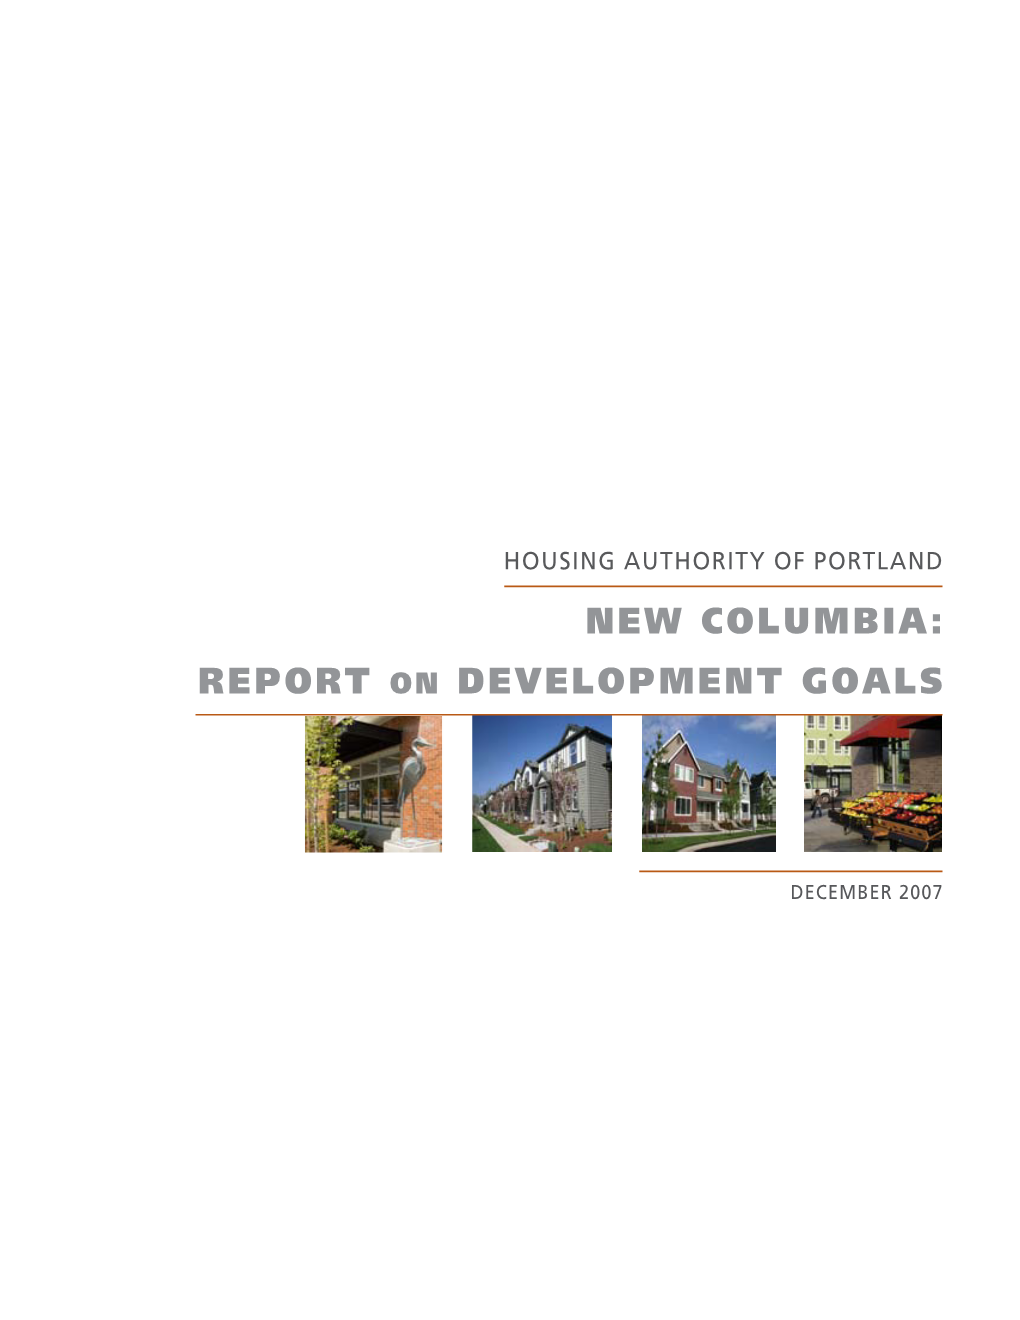 New Columbia: Report on Development Goals